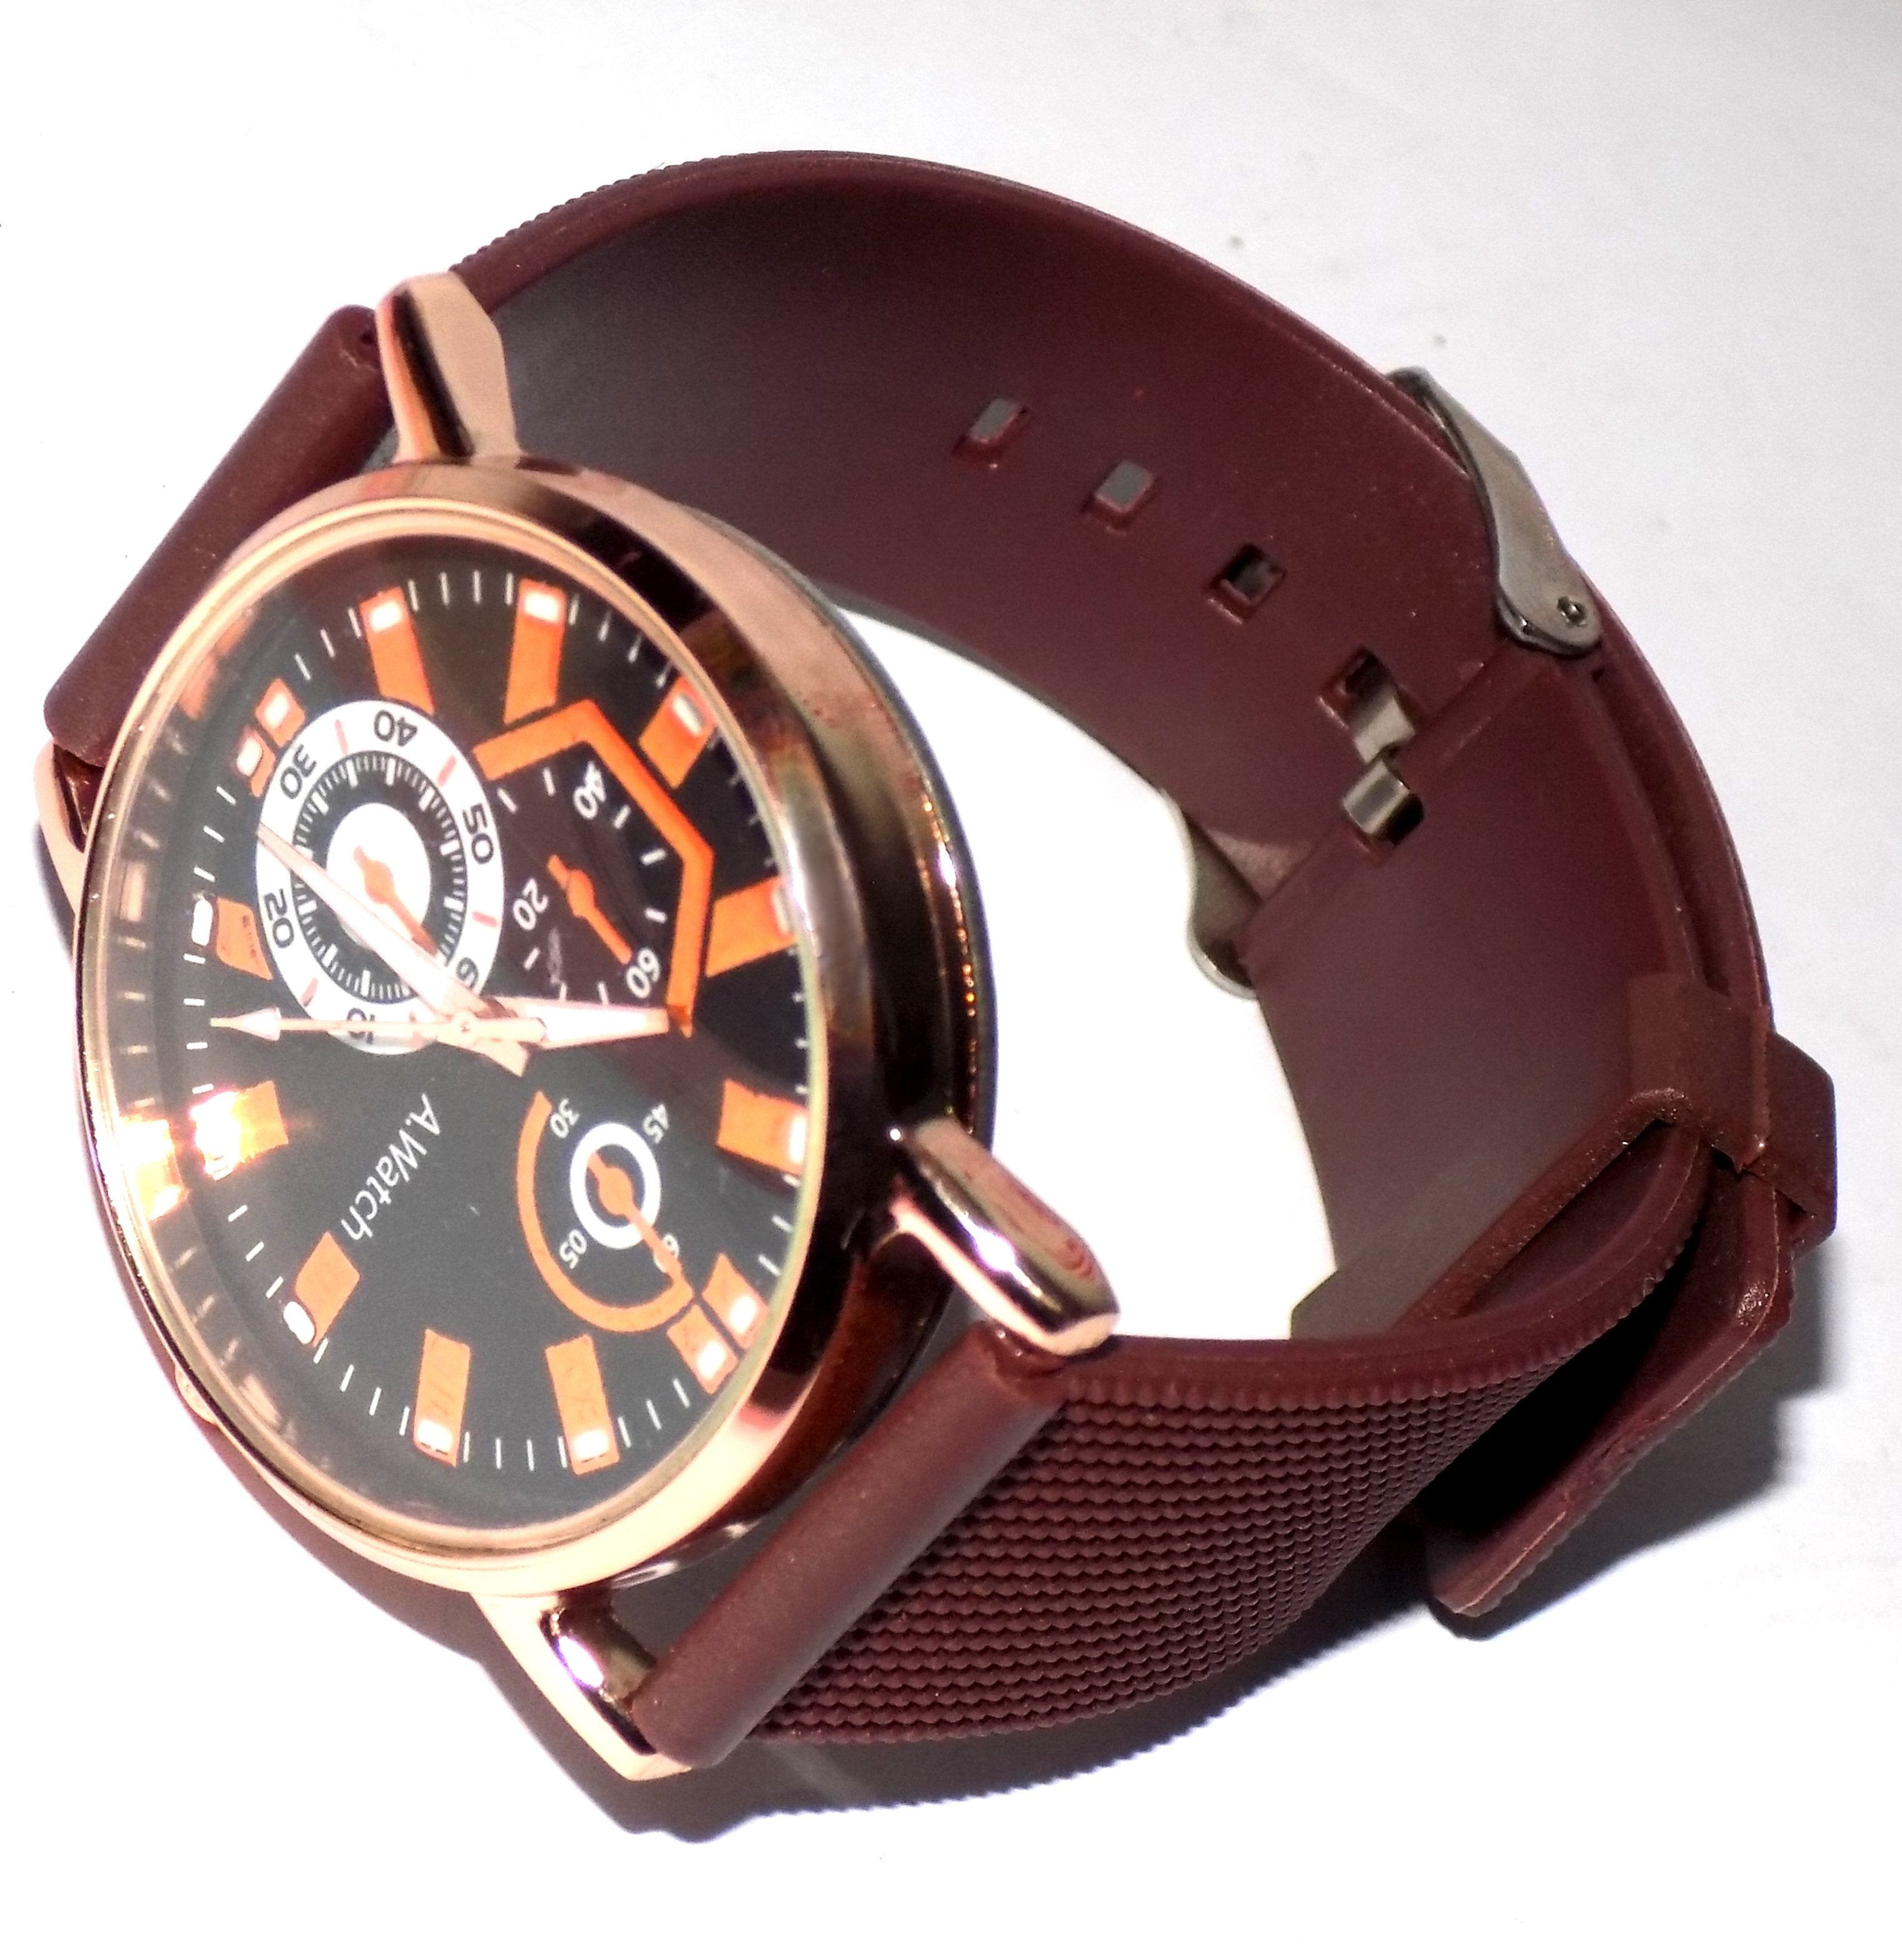 1818 Unique & Premium Analogue Stylish Watch With Stylish Wrist Band - SkyShopy